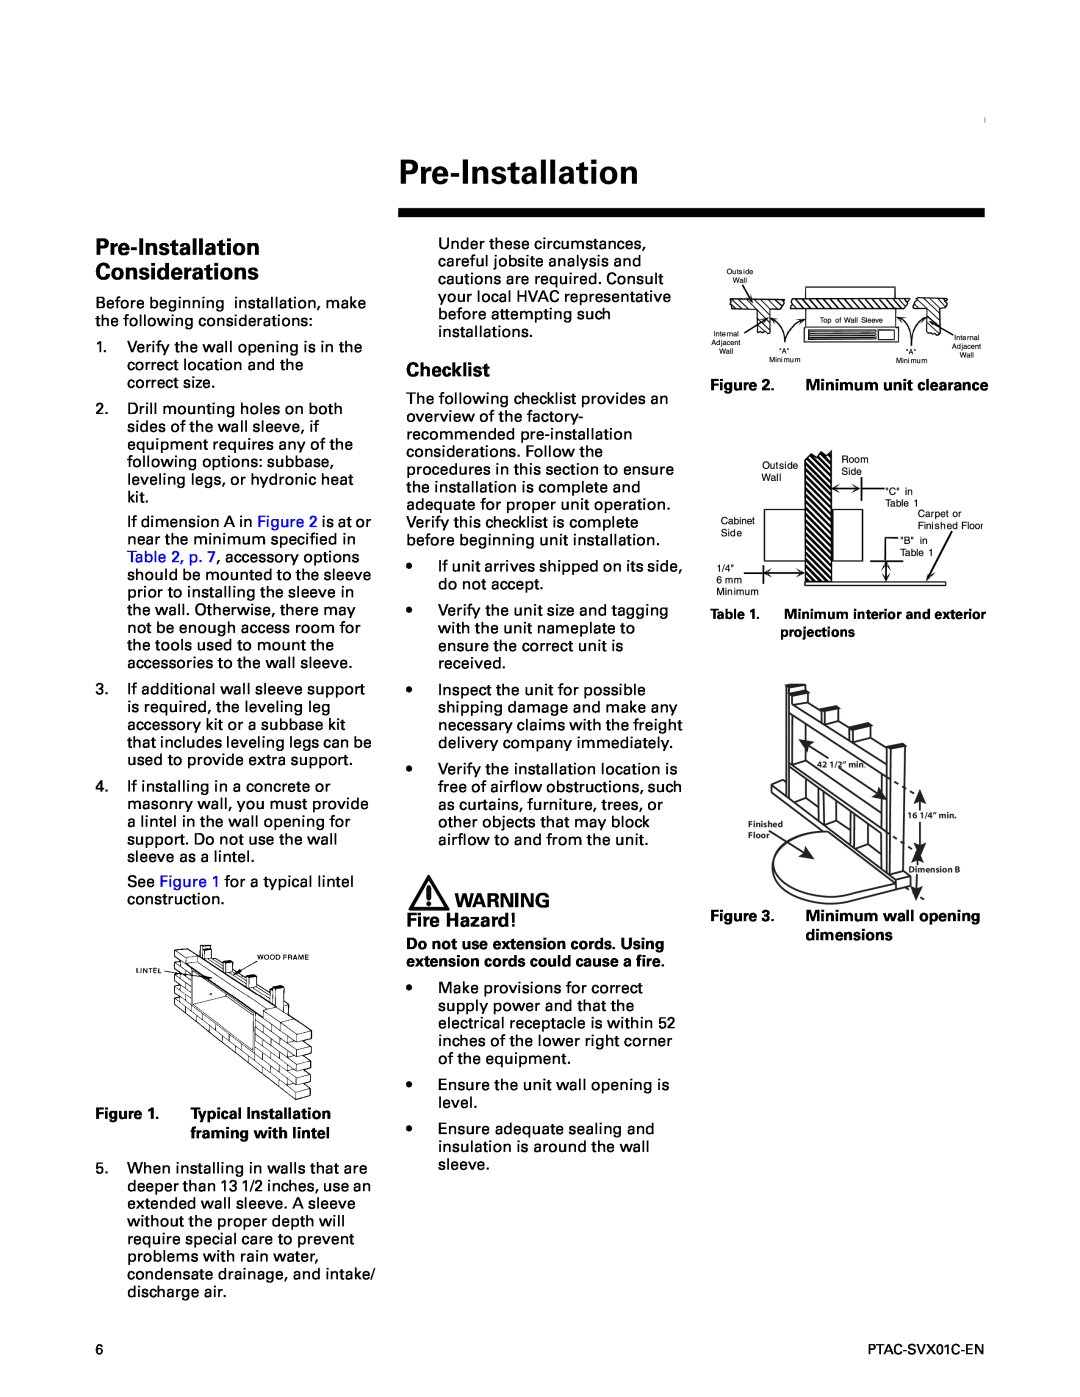 Trane PTAC-SVX01C-EN manual Pre-Installation Considerations, Checklist, Fire Hazard 